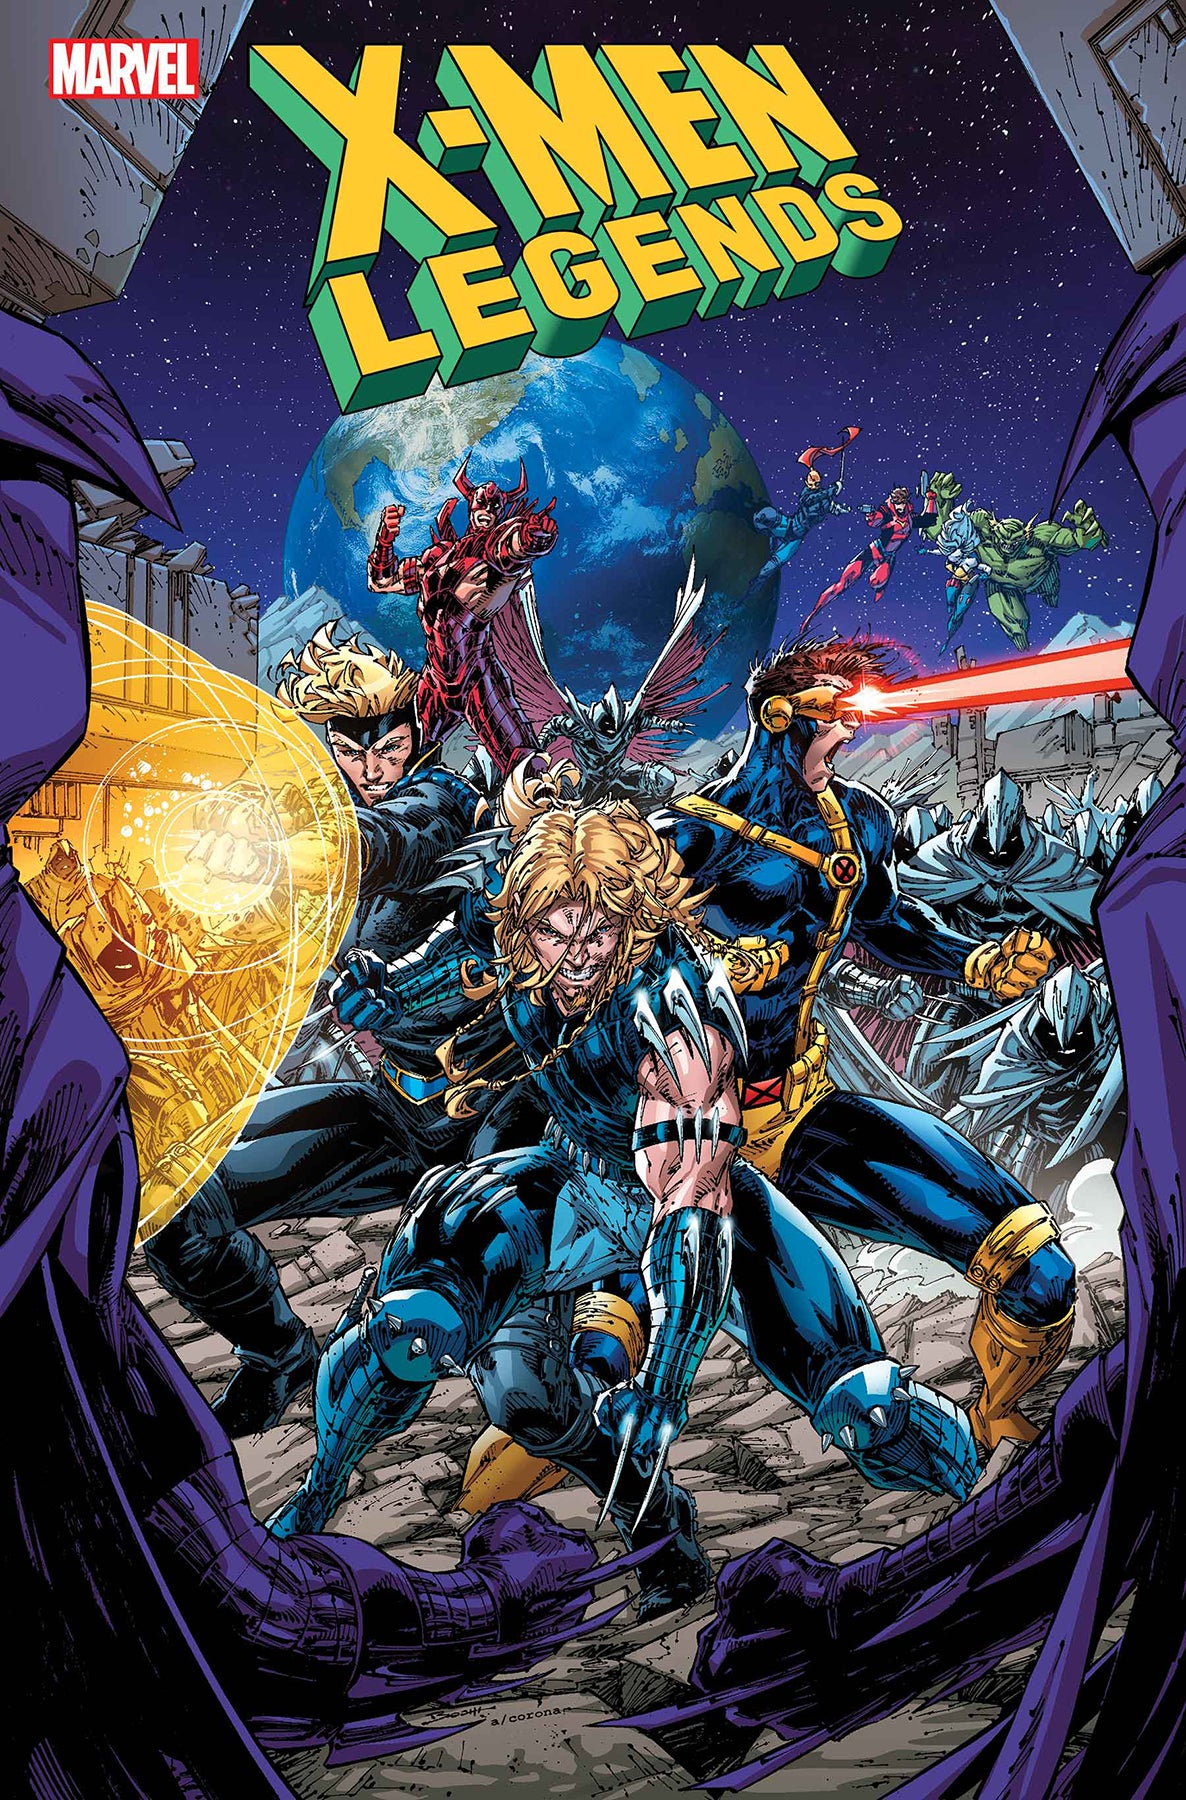 NECA Short Comic Book Art Storage Box - FCBD 2022 Marvel X-Men